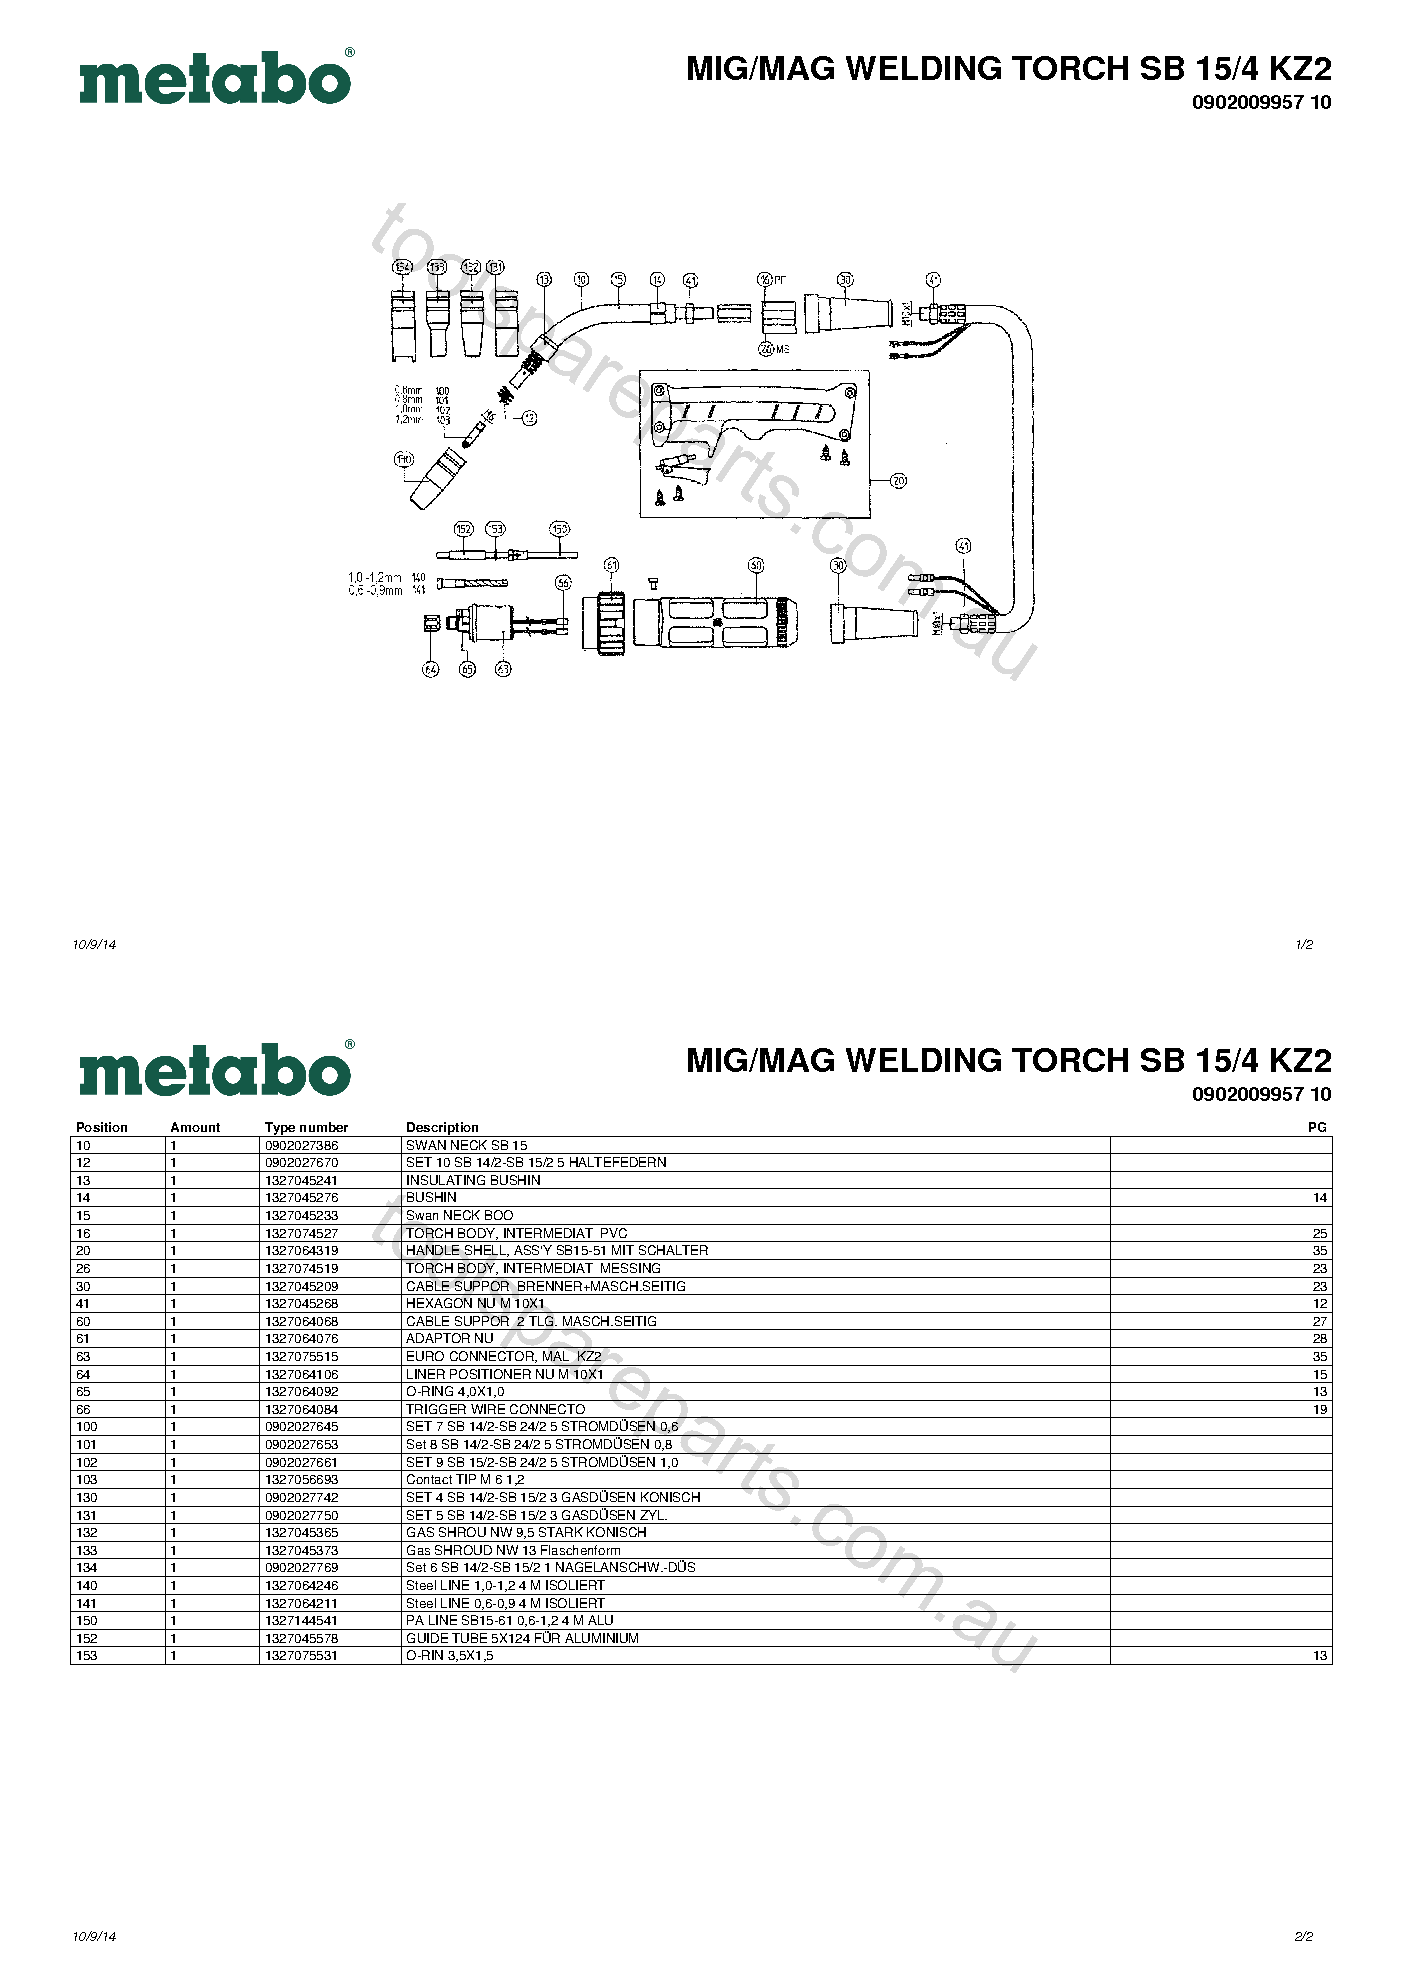 Metabo MIG/MAG WELDING TORCH SB 15/4 KZ2 0902009957 10  Diagram 1